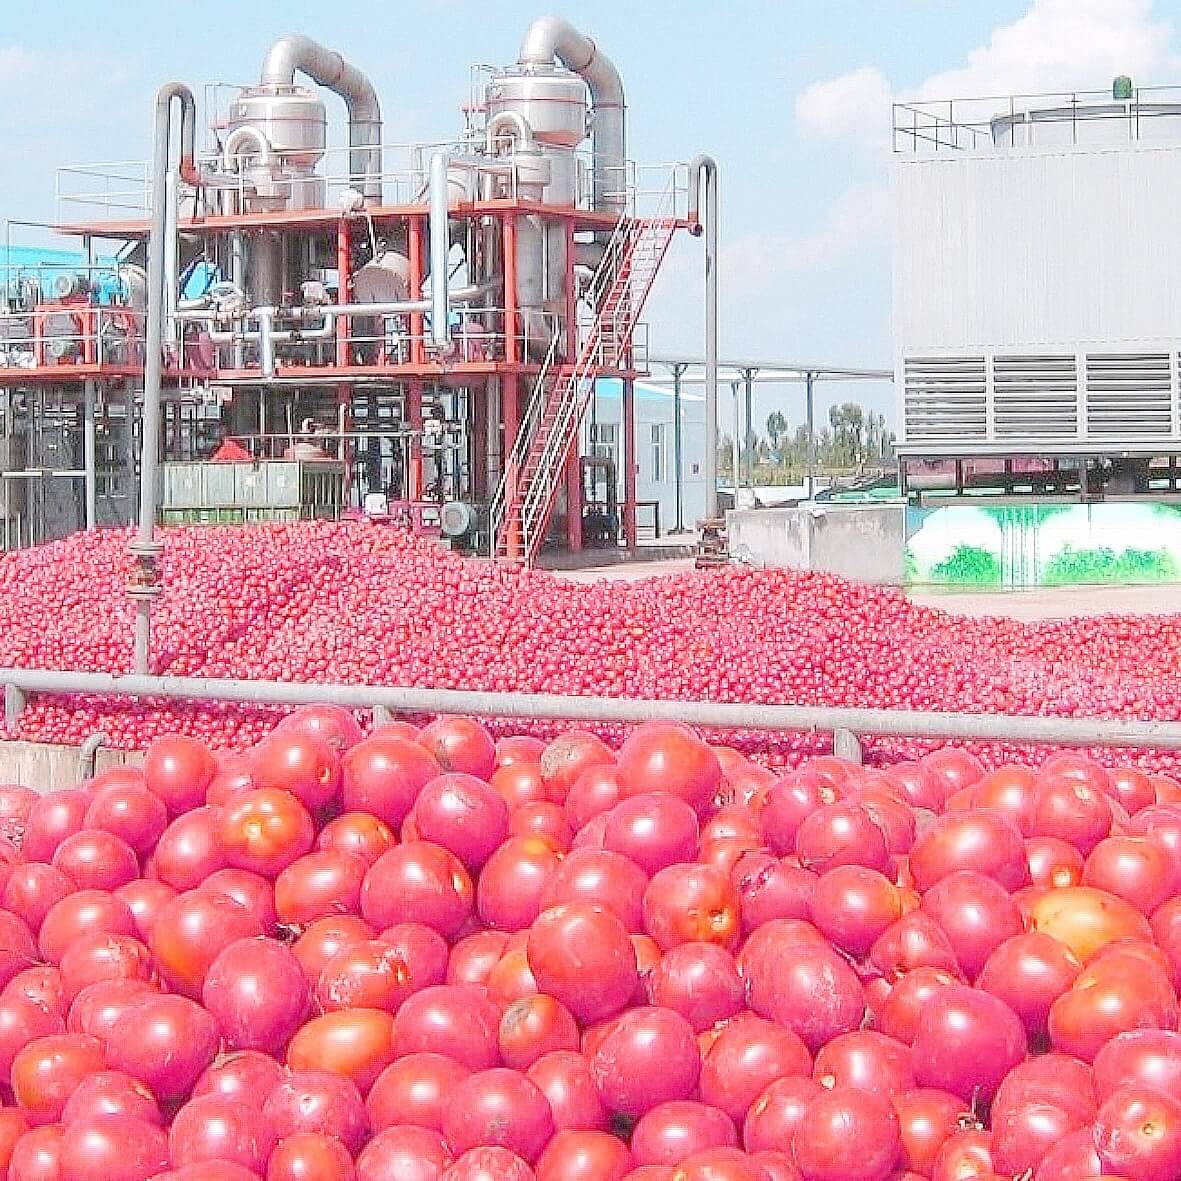 Tomato sauce processing equipment